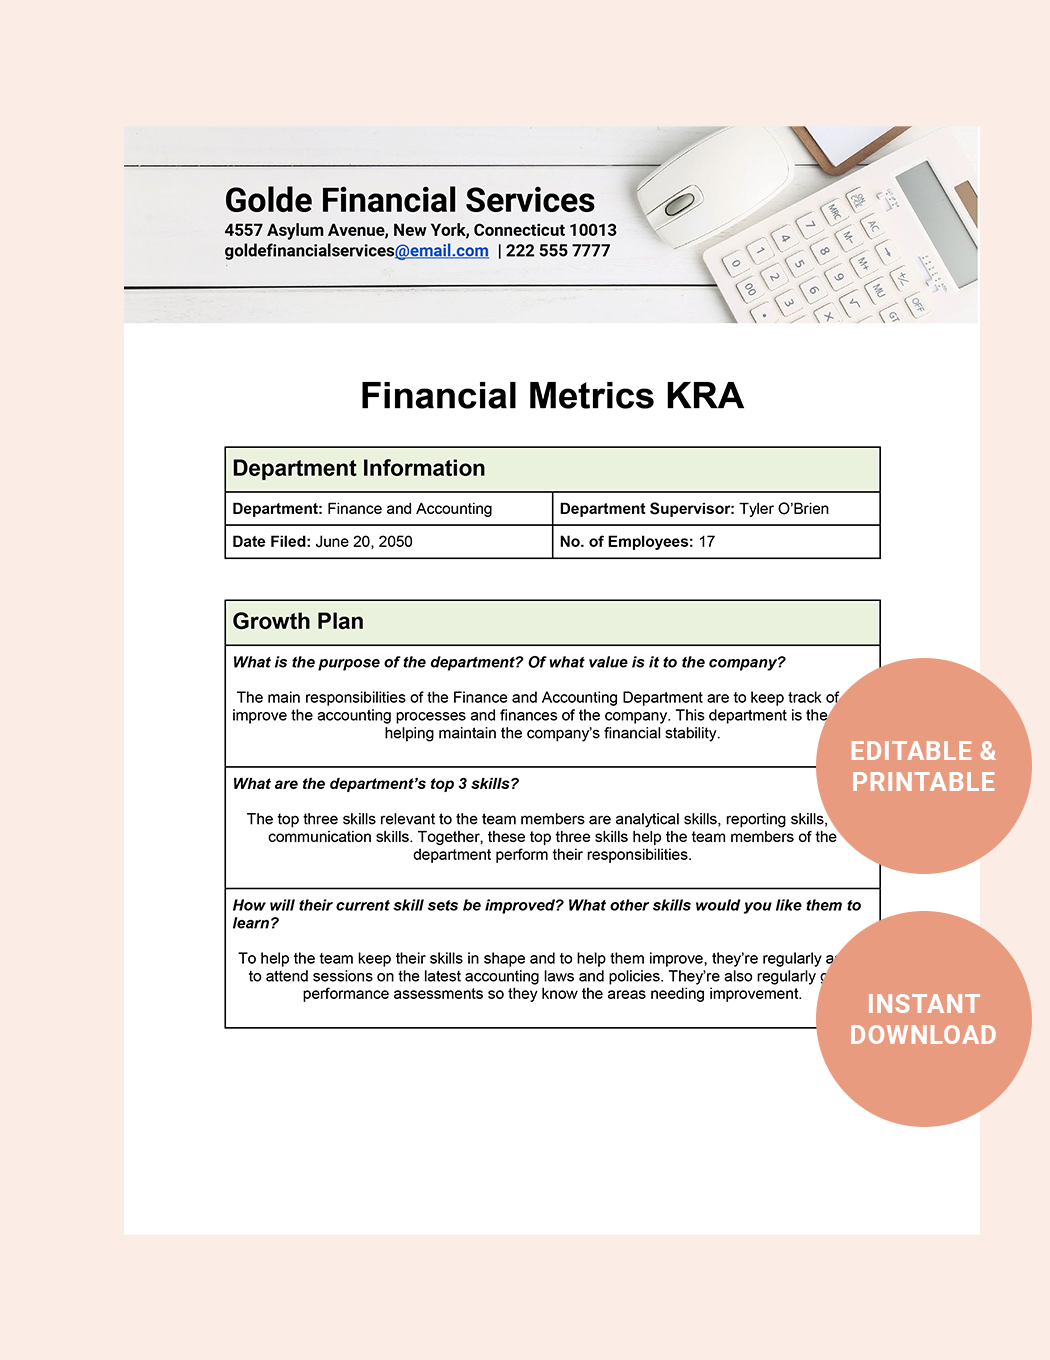 Financial Metrics KRA Template